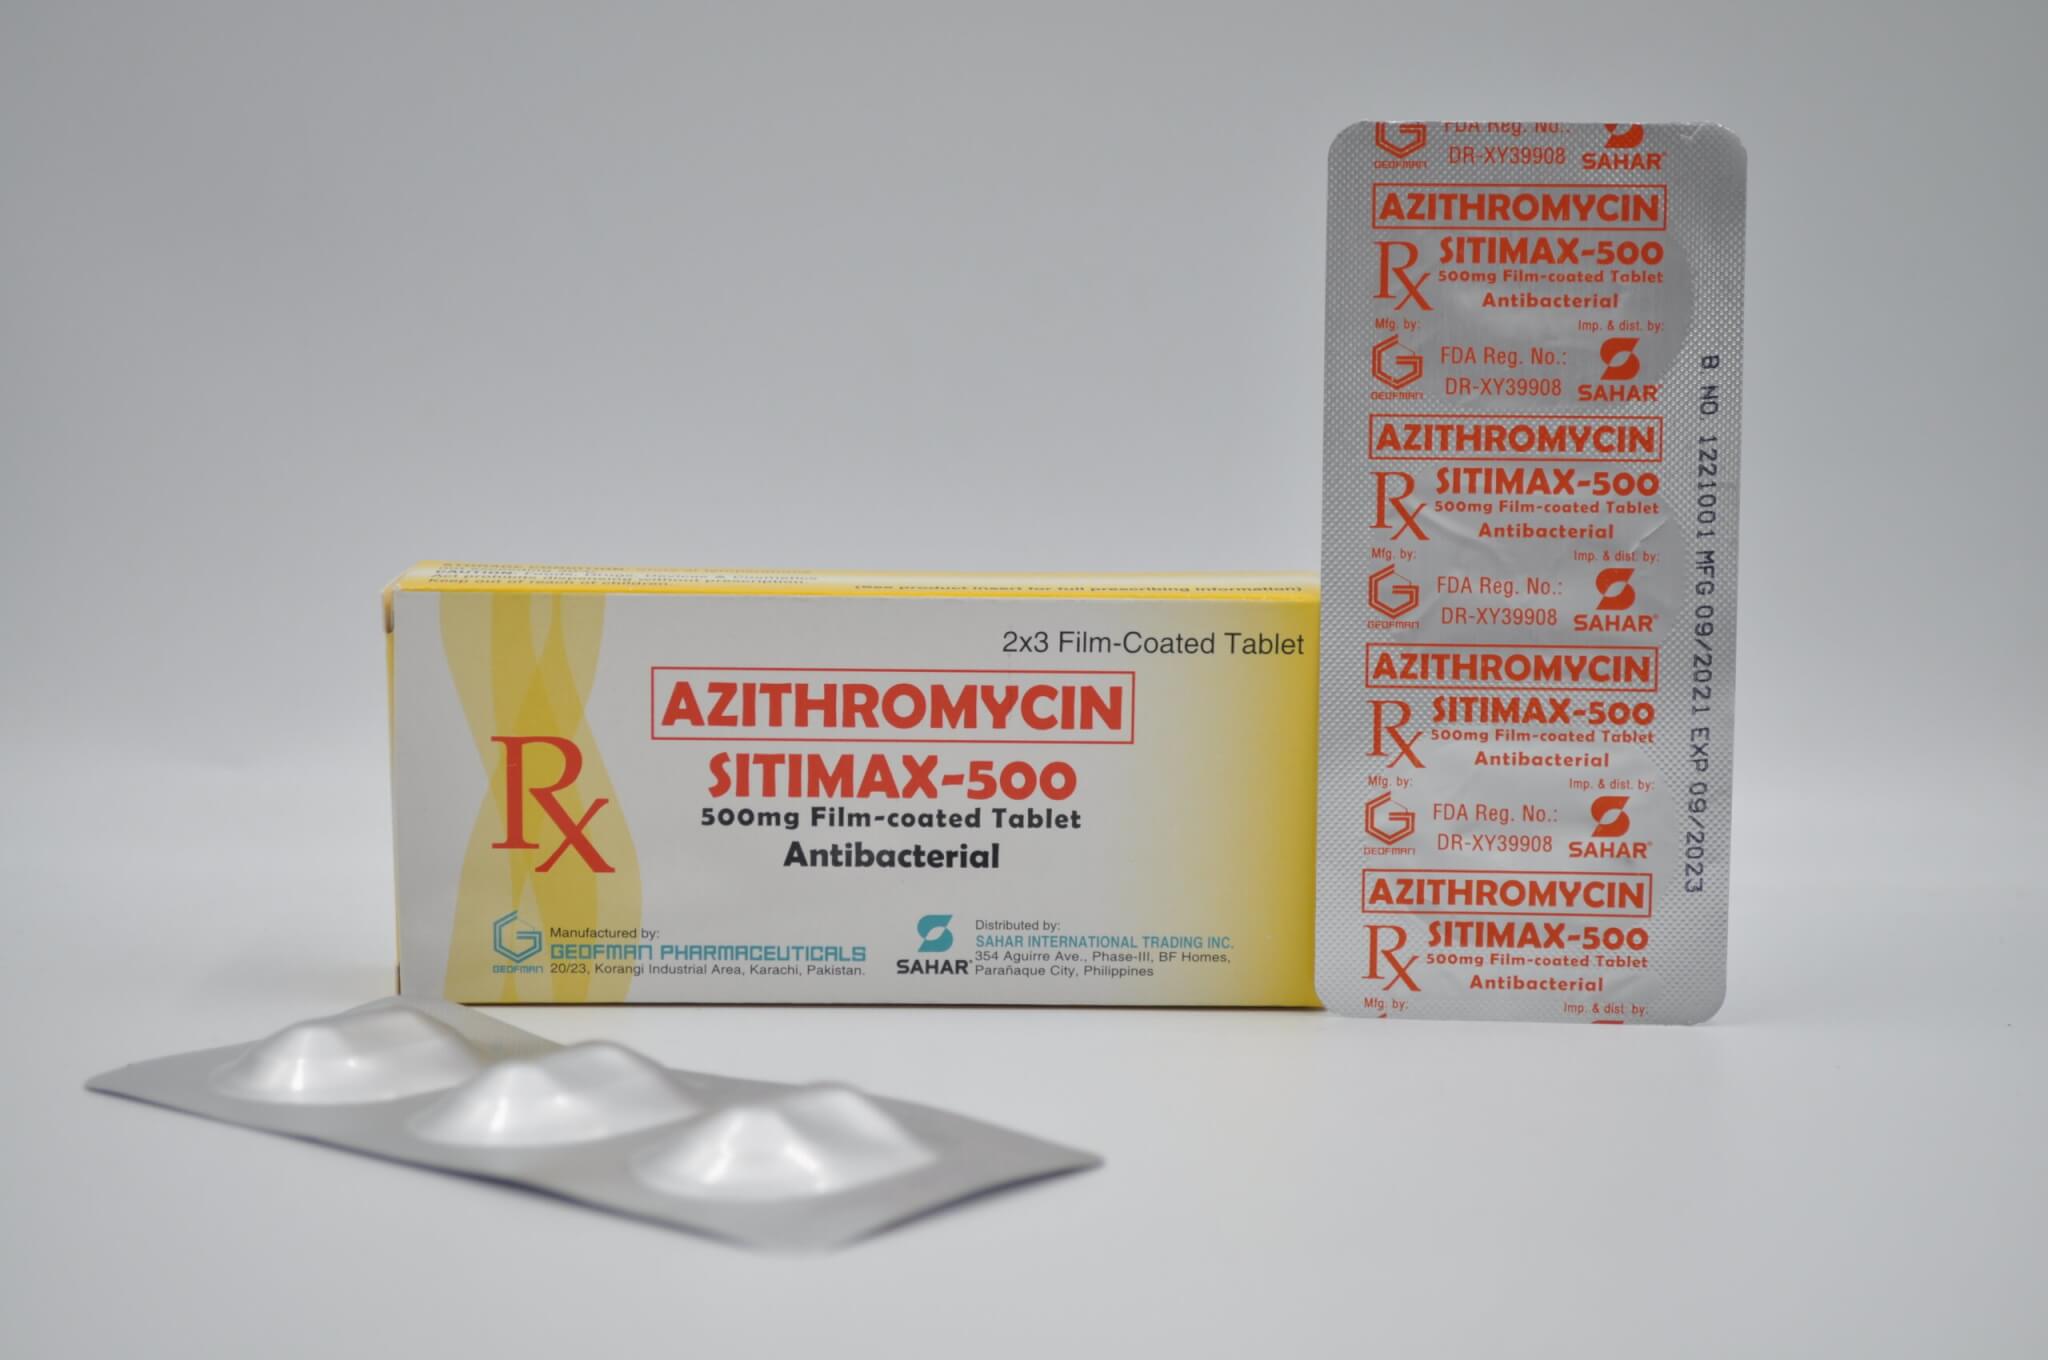 Azithromycin (SITIMAX) 500 mg